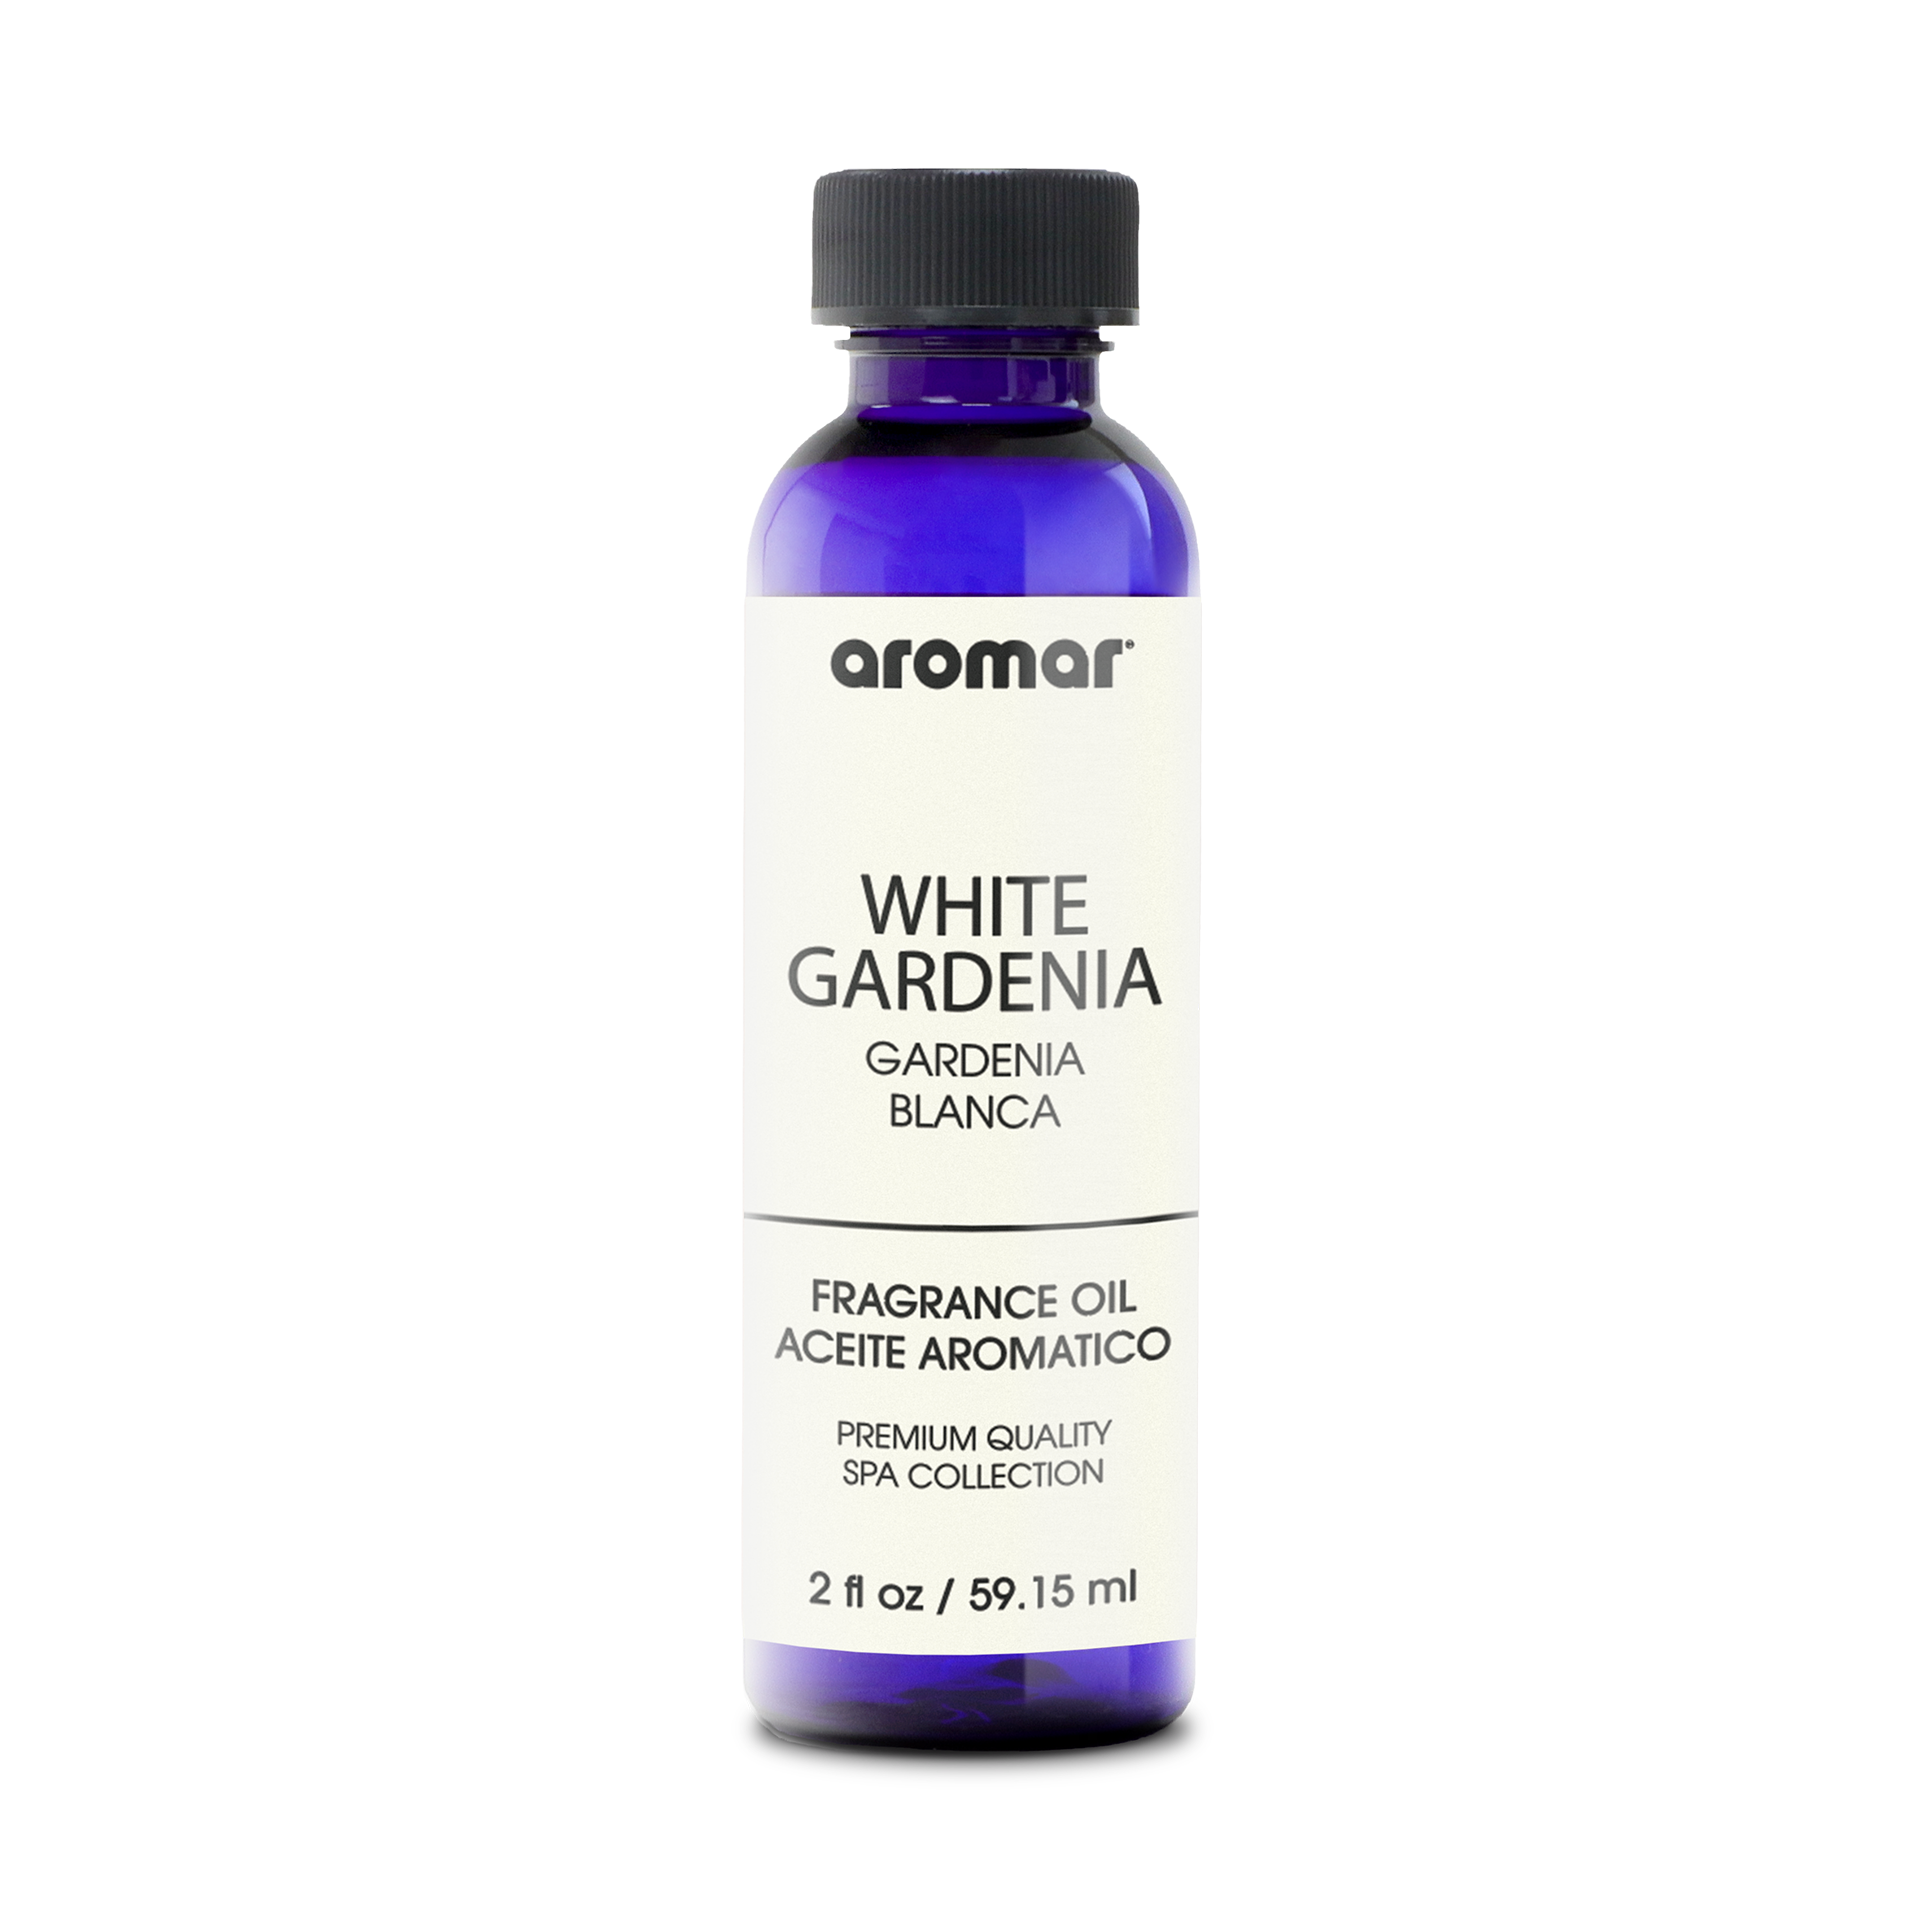 https://www.aromar.net/wholesale/images/detailed/12/White_Gardenia.png